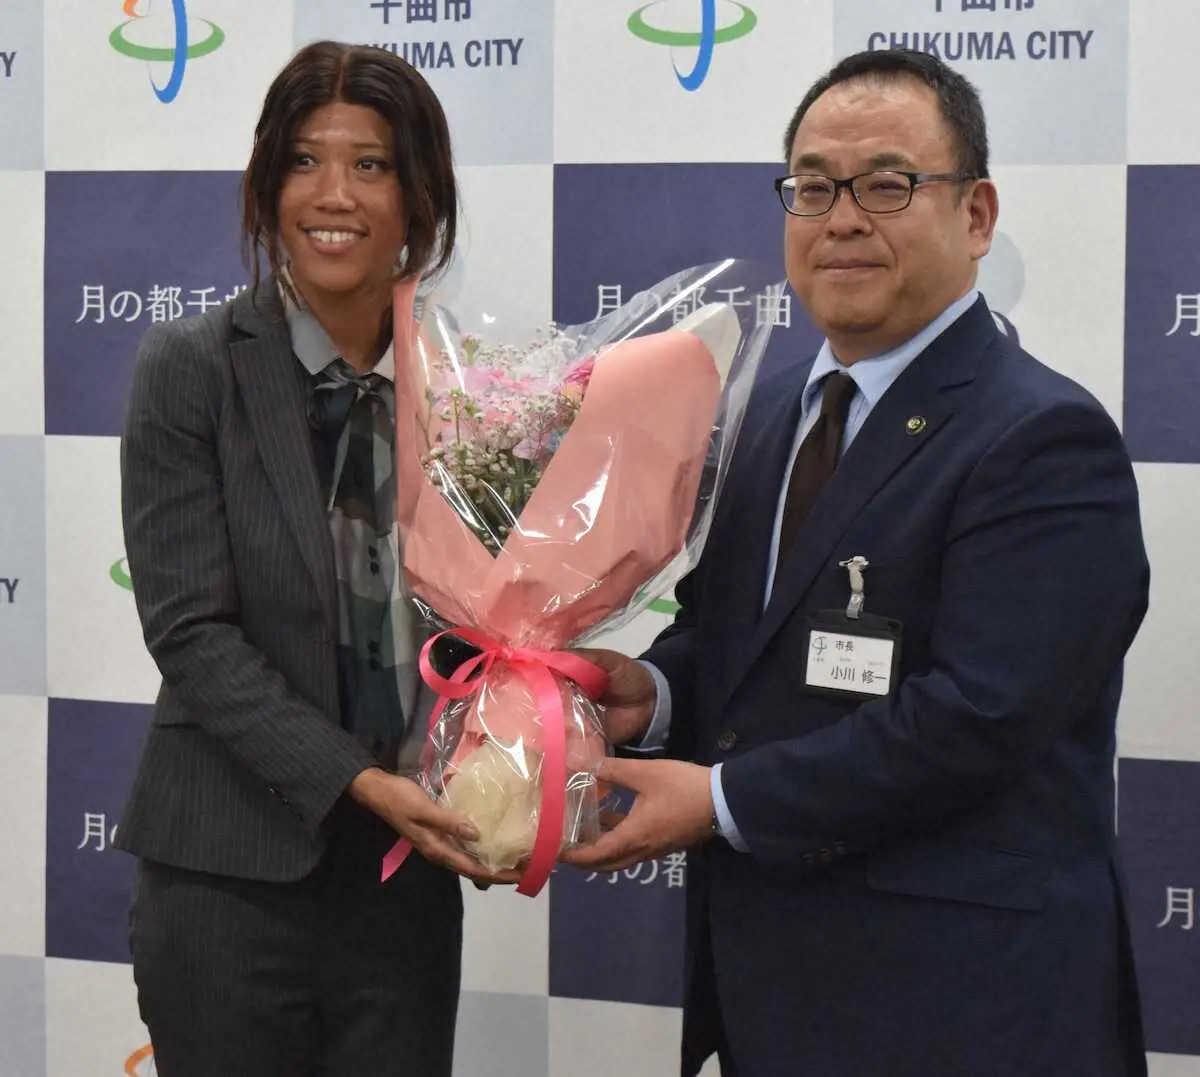 小川市長から花束を受け取る君嶋（左）